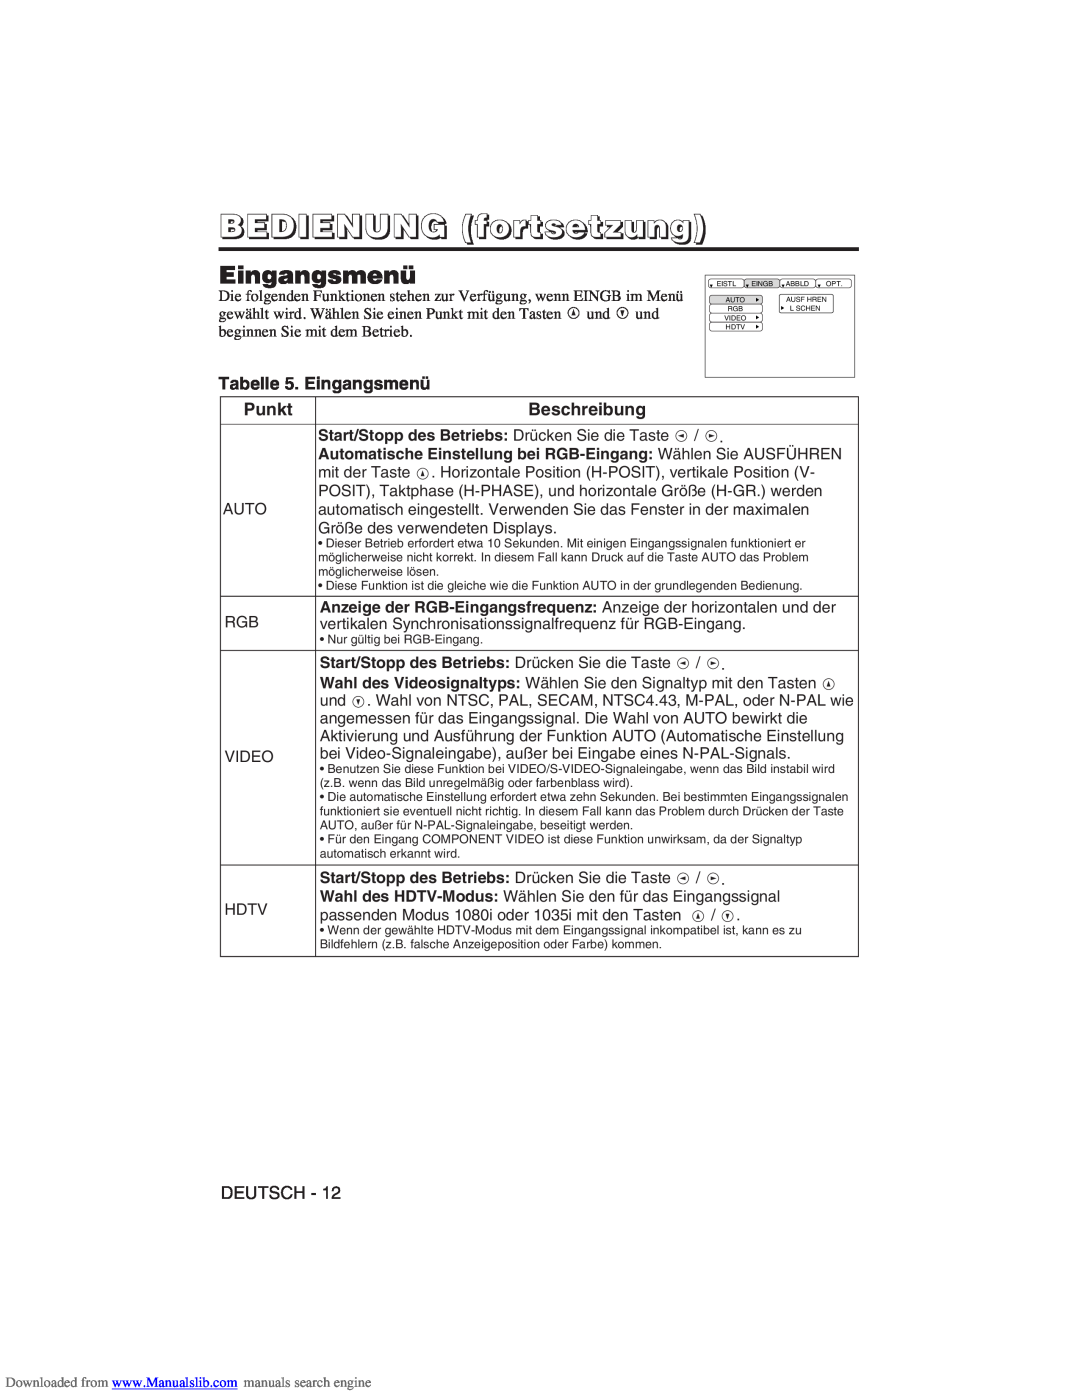 Hitachi CP-X275W user manual Tabelle 5. Eingangsmenü, BEDIENUNG fortsetzung, Punkt, Beschreibung 